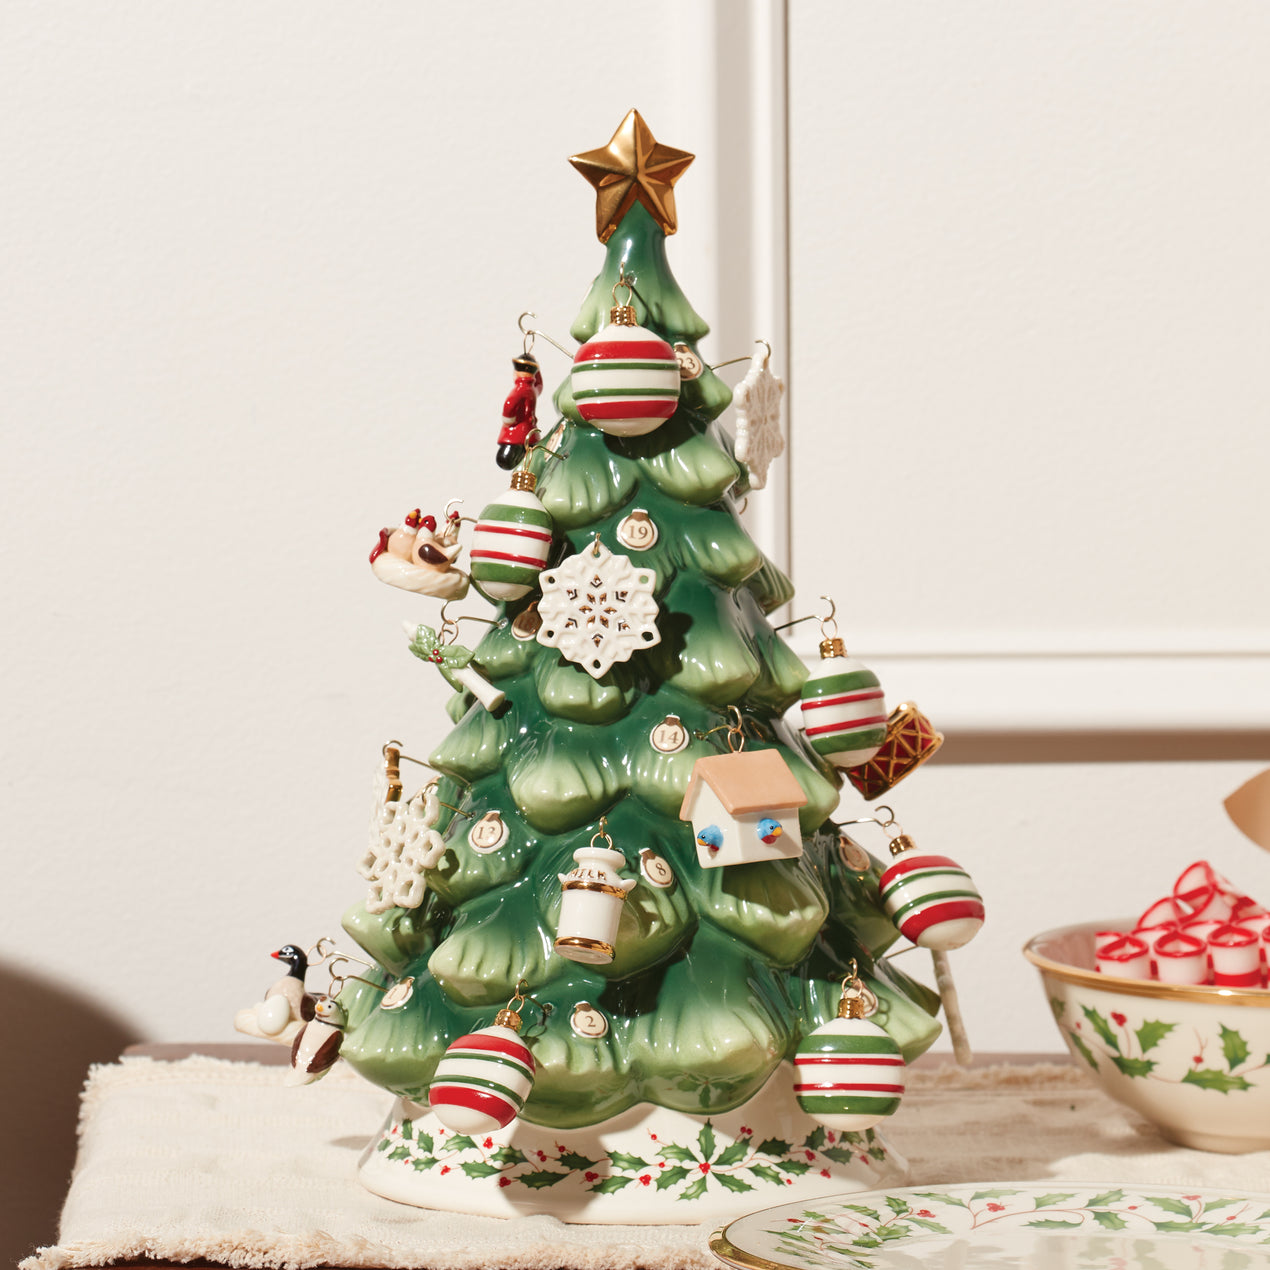 Advent Calendar Tree & Ornaments 25-Piece Set – Lenox Corporation